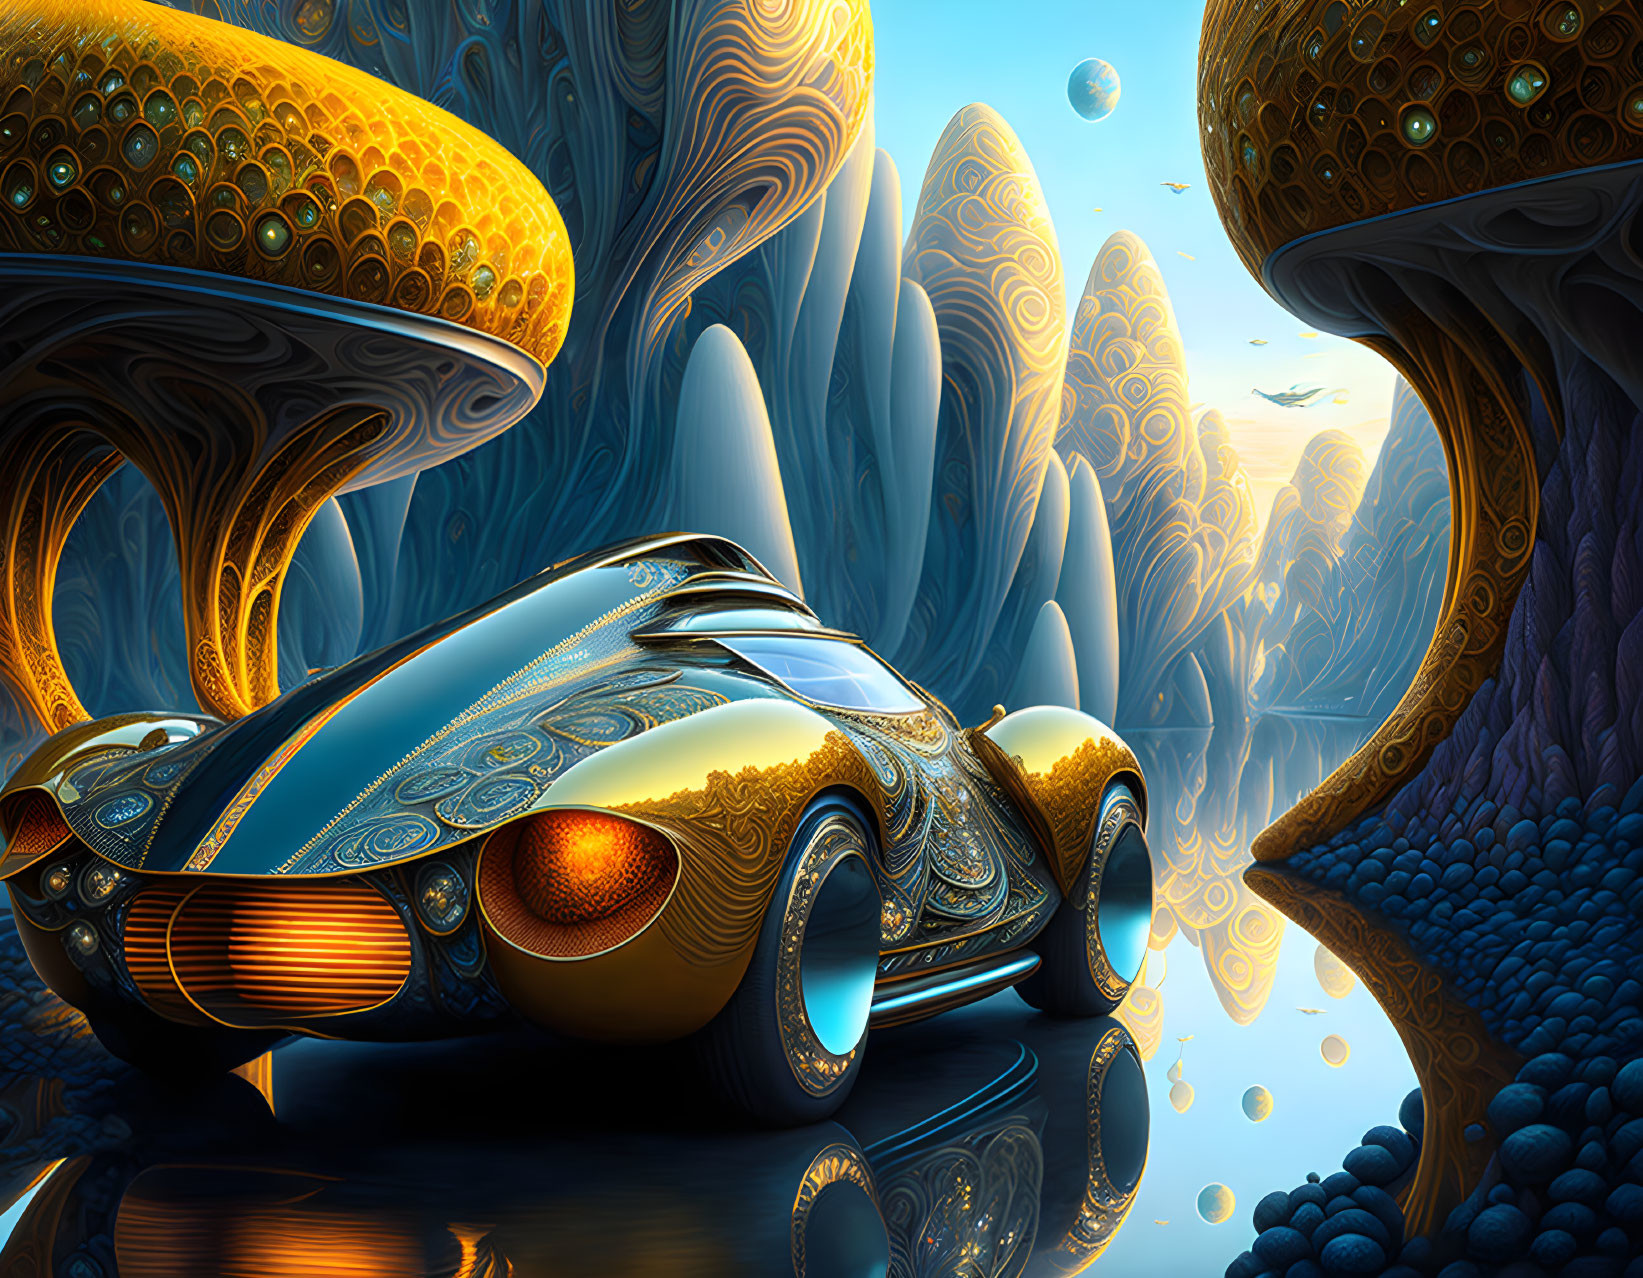 Ornate futuristic car in alien landscape with mushroom structures